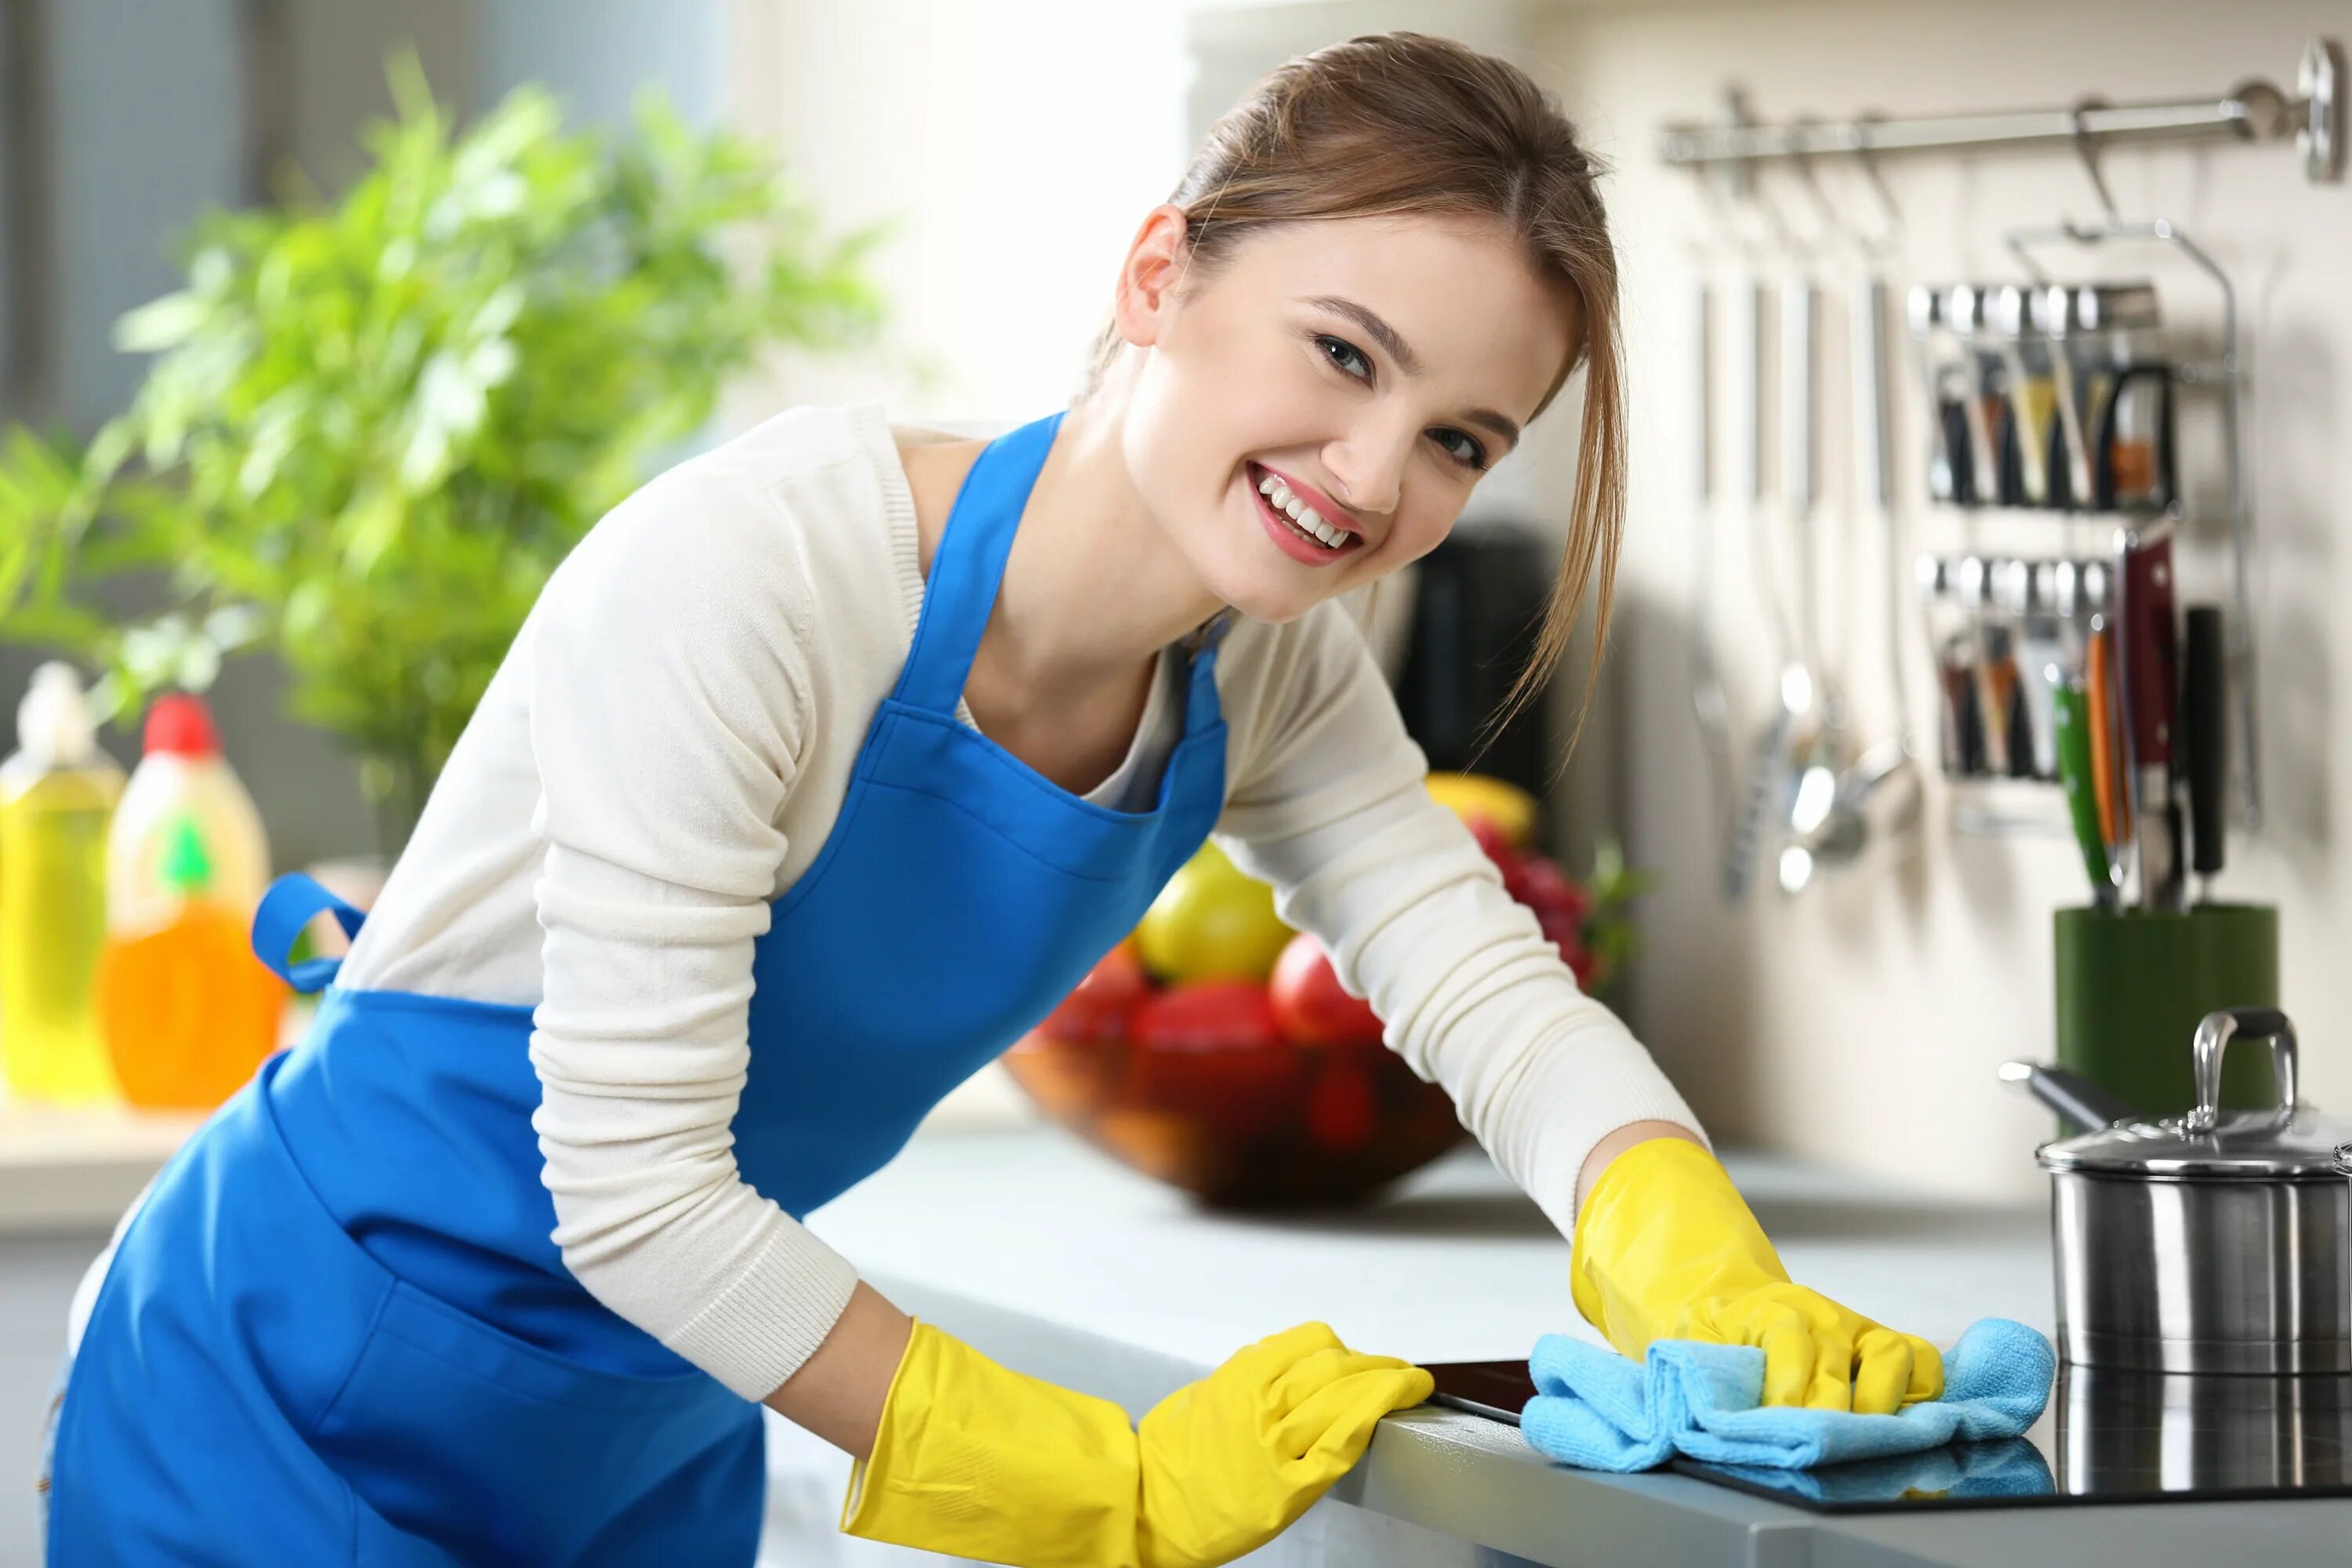 Woman cleaning. Клининг кухни. Чистота на кухне. Чистая кухня. Женщина на кухне.